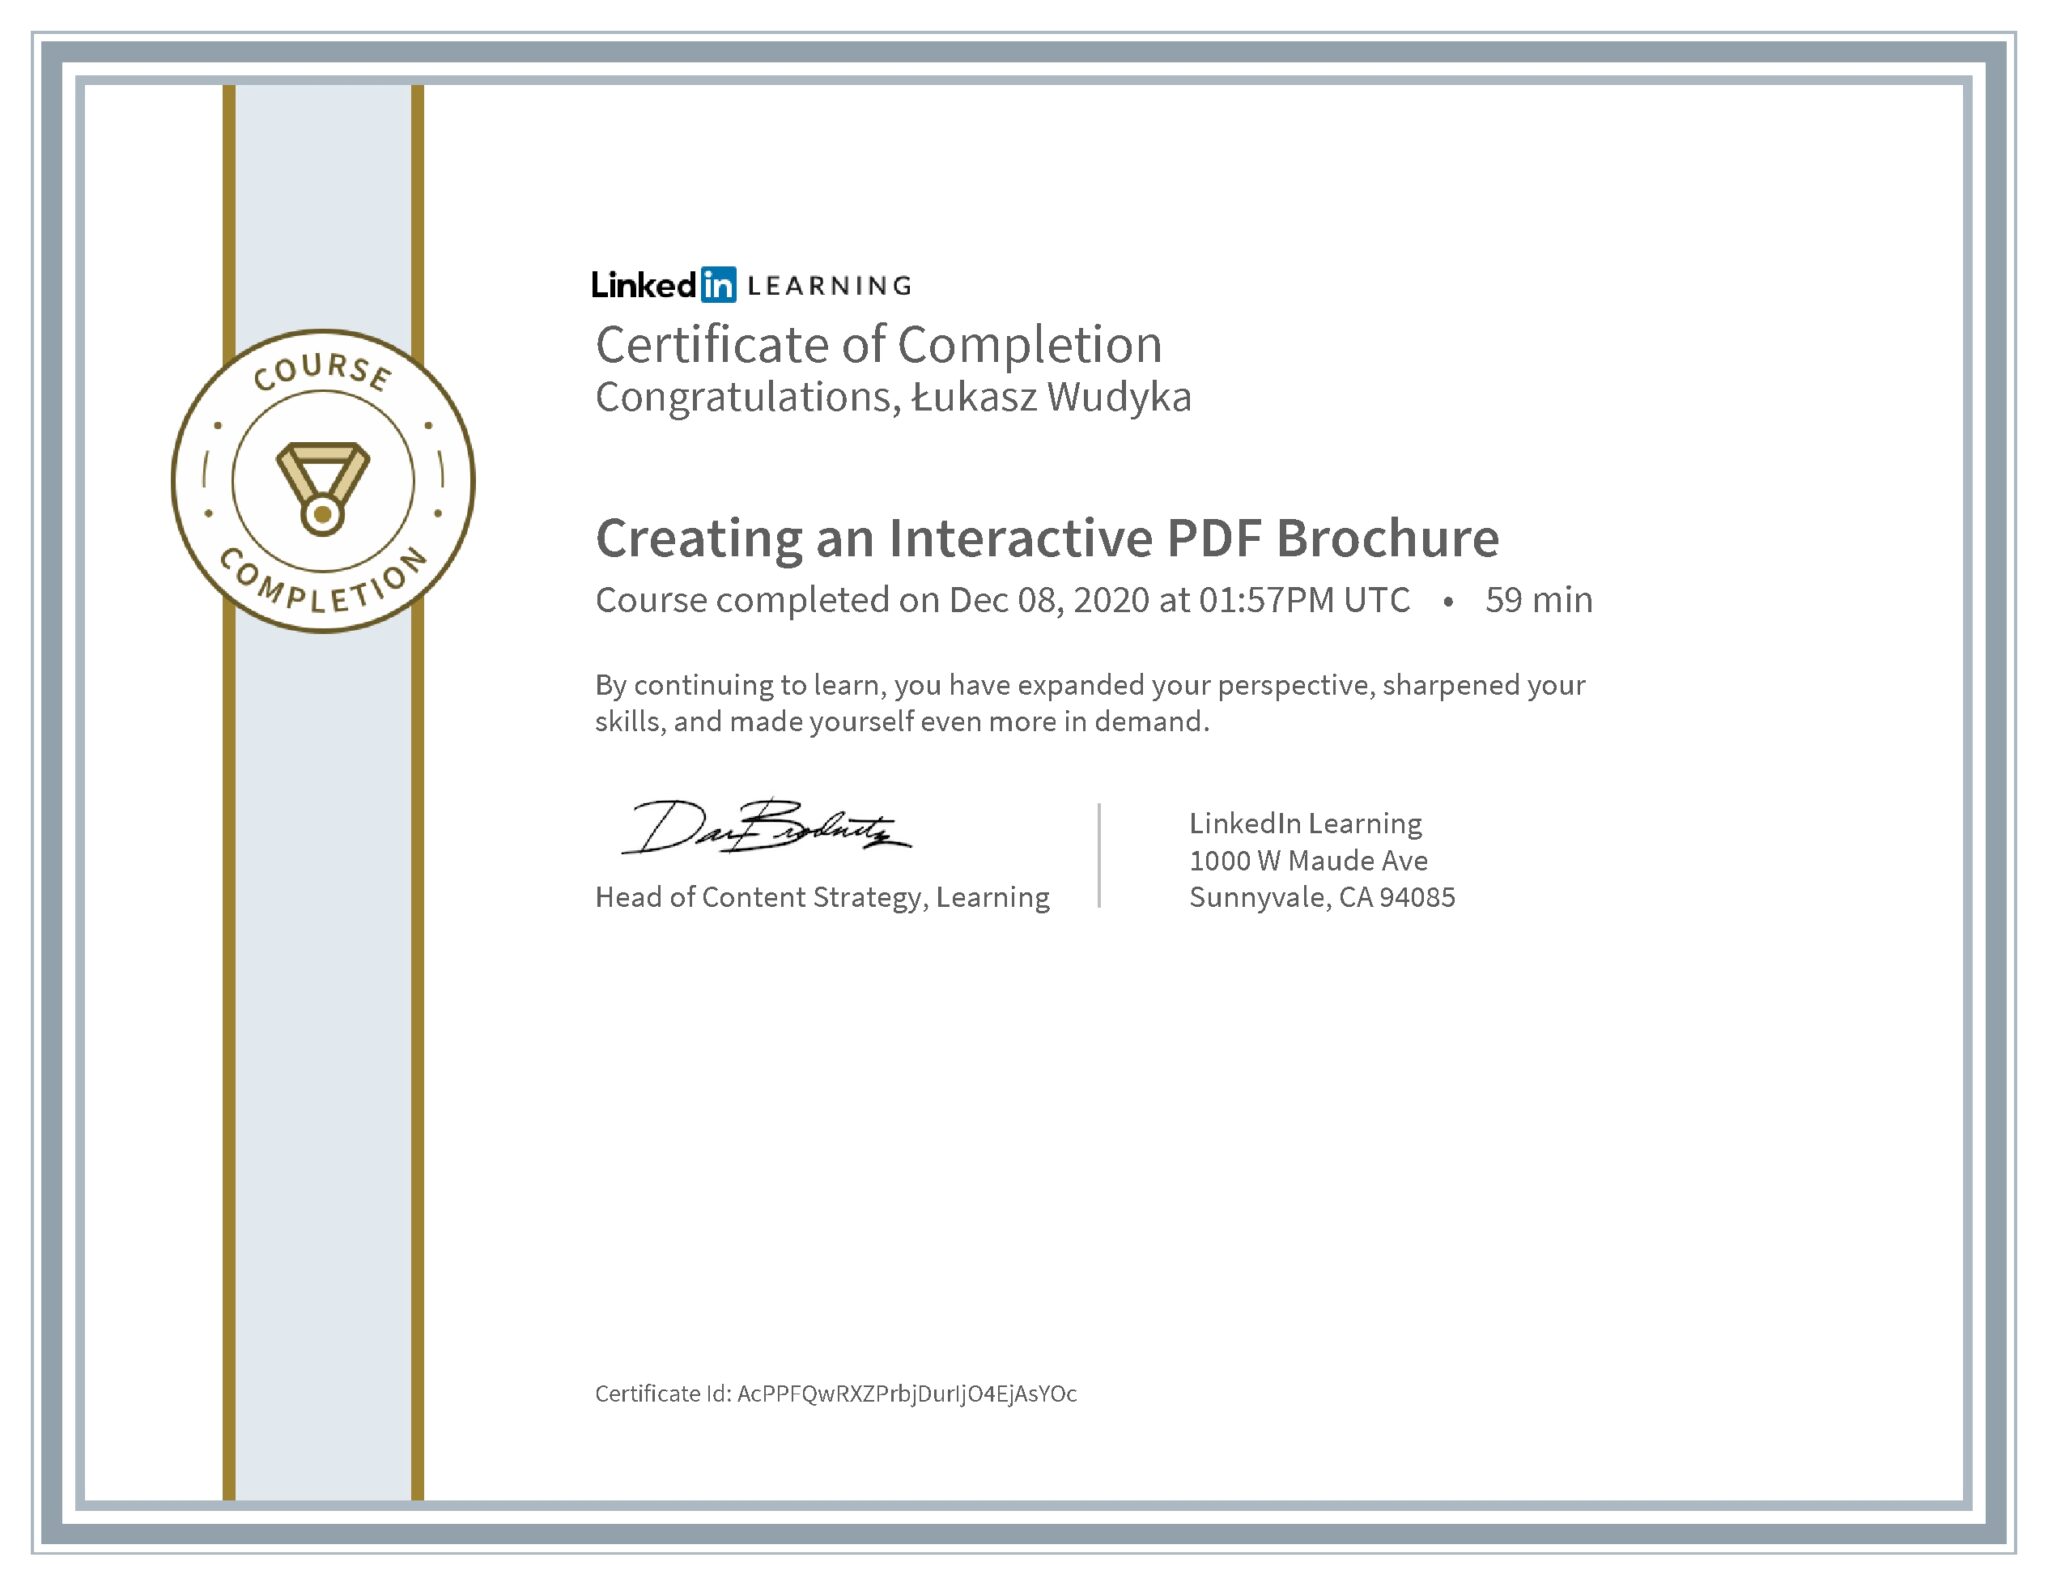 Łukasz Wudyka certyfikat LinkedIn Creating an Interactive PDF Brochure